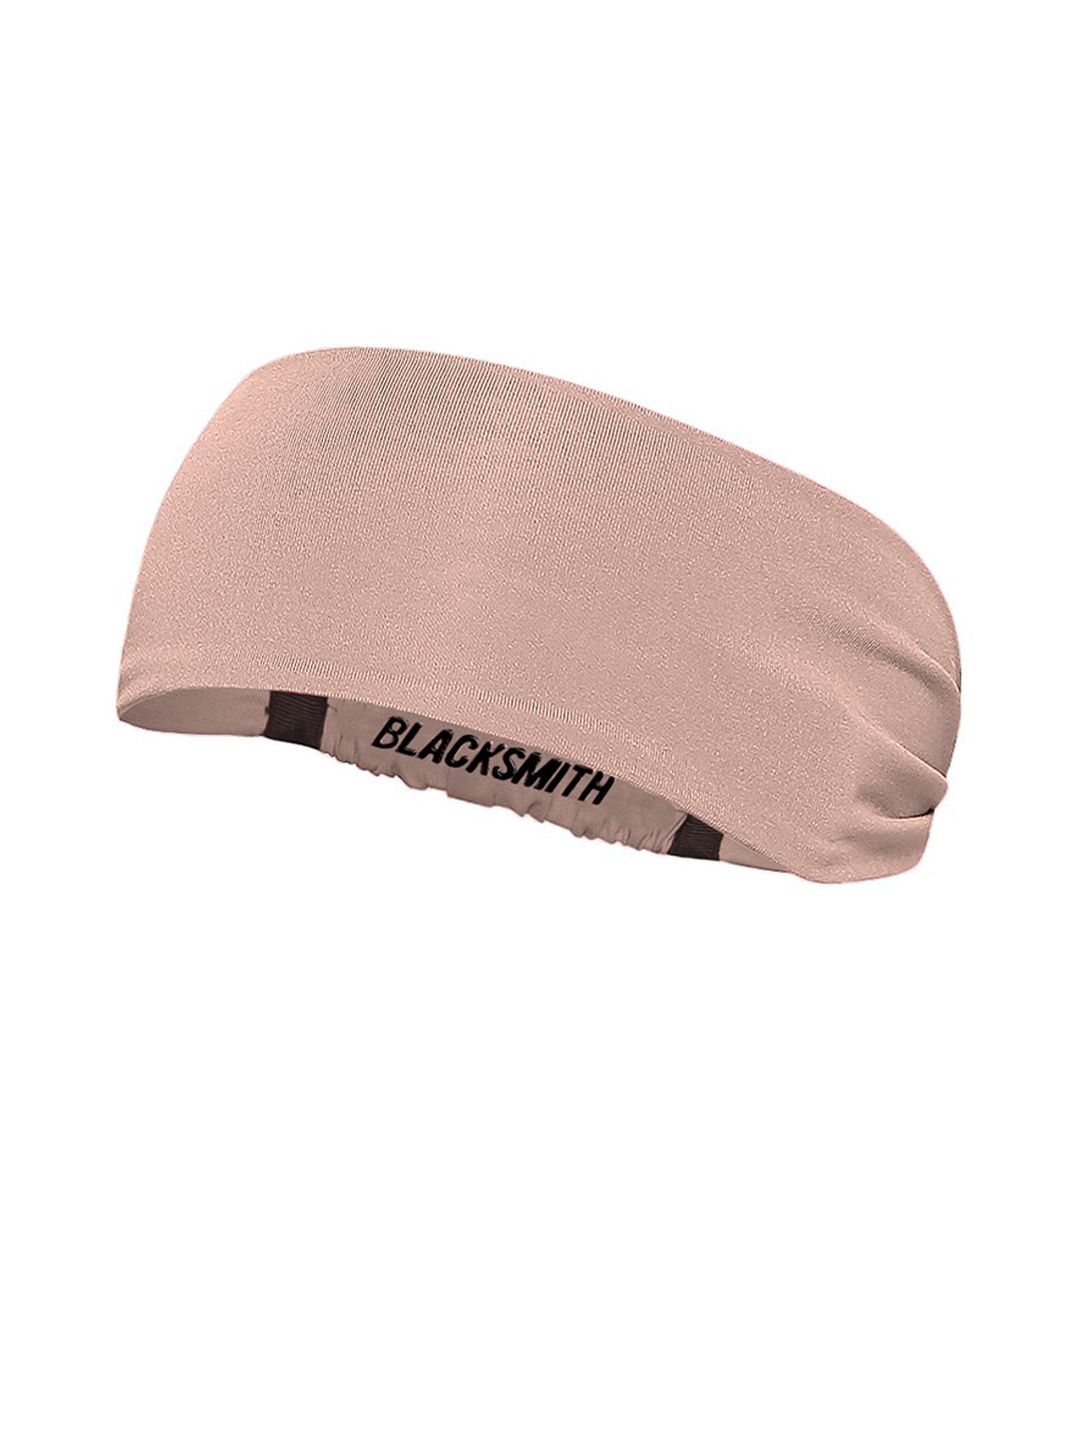 Blacksmith Pink Solid Sports Headband Price in India